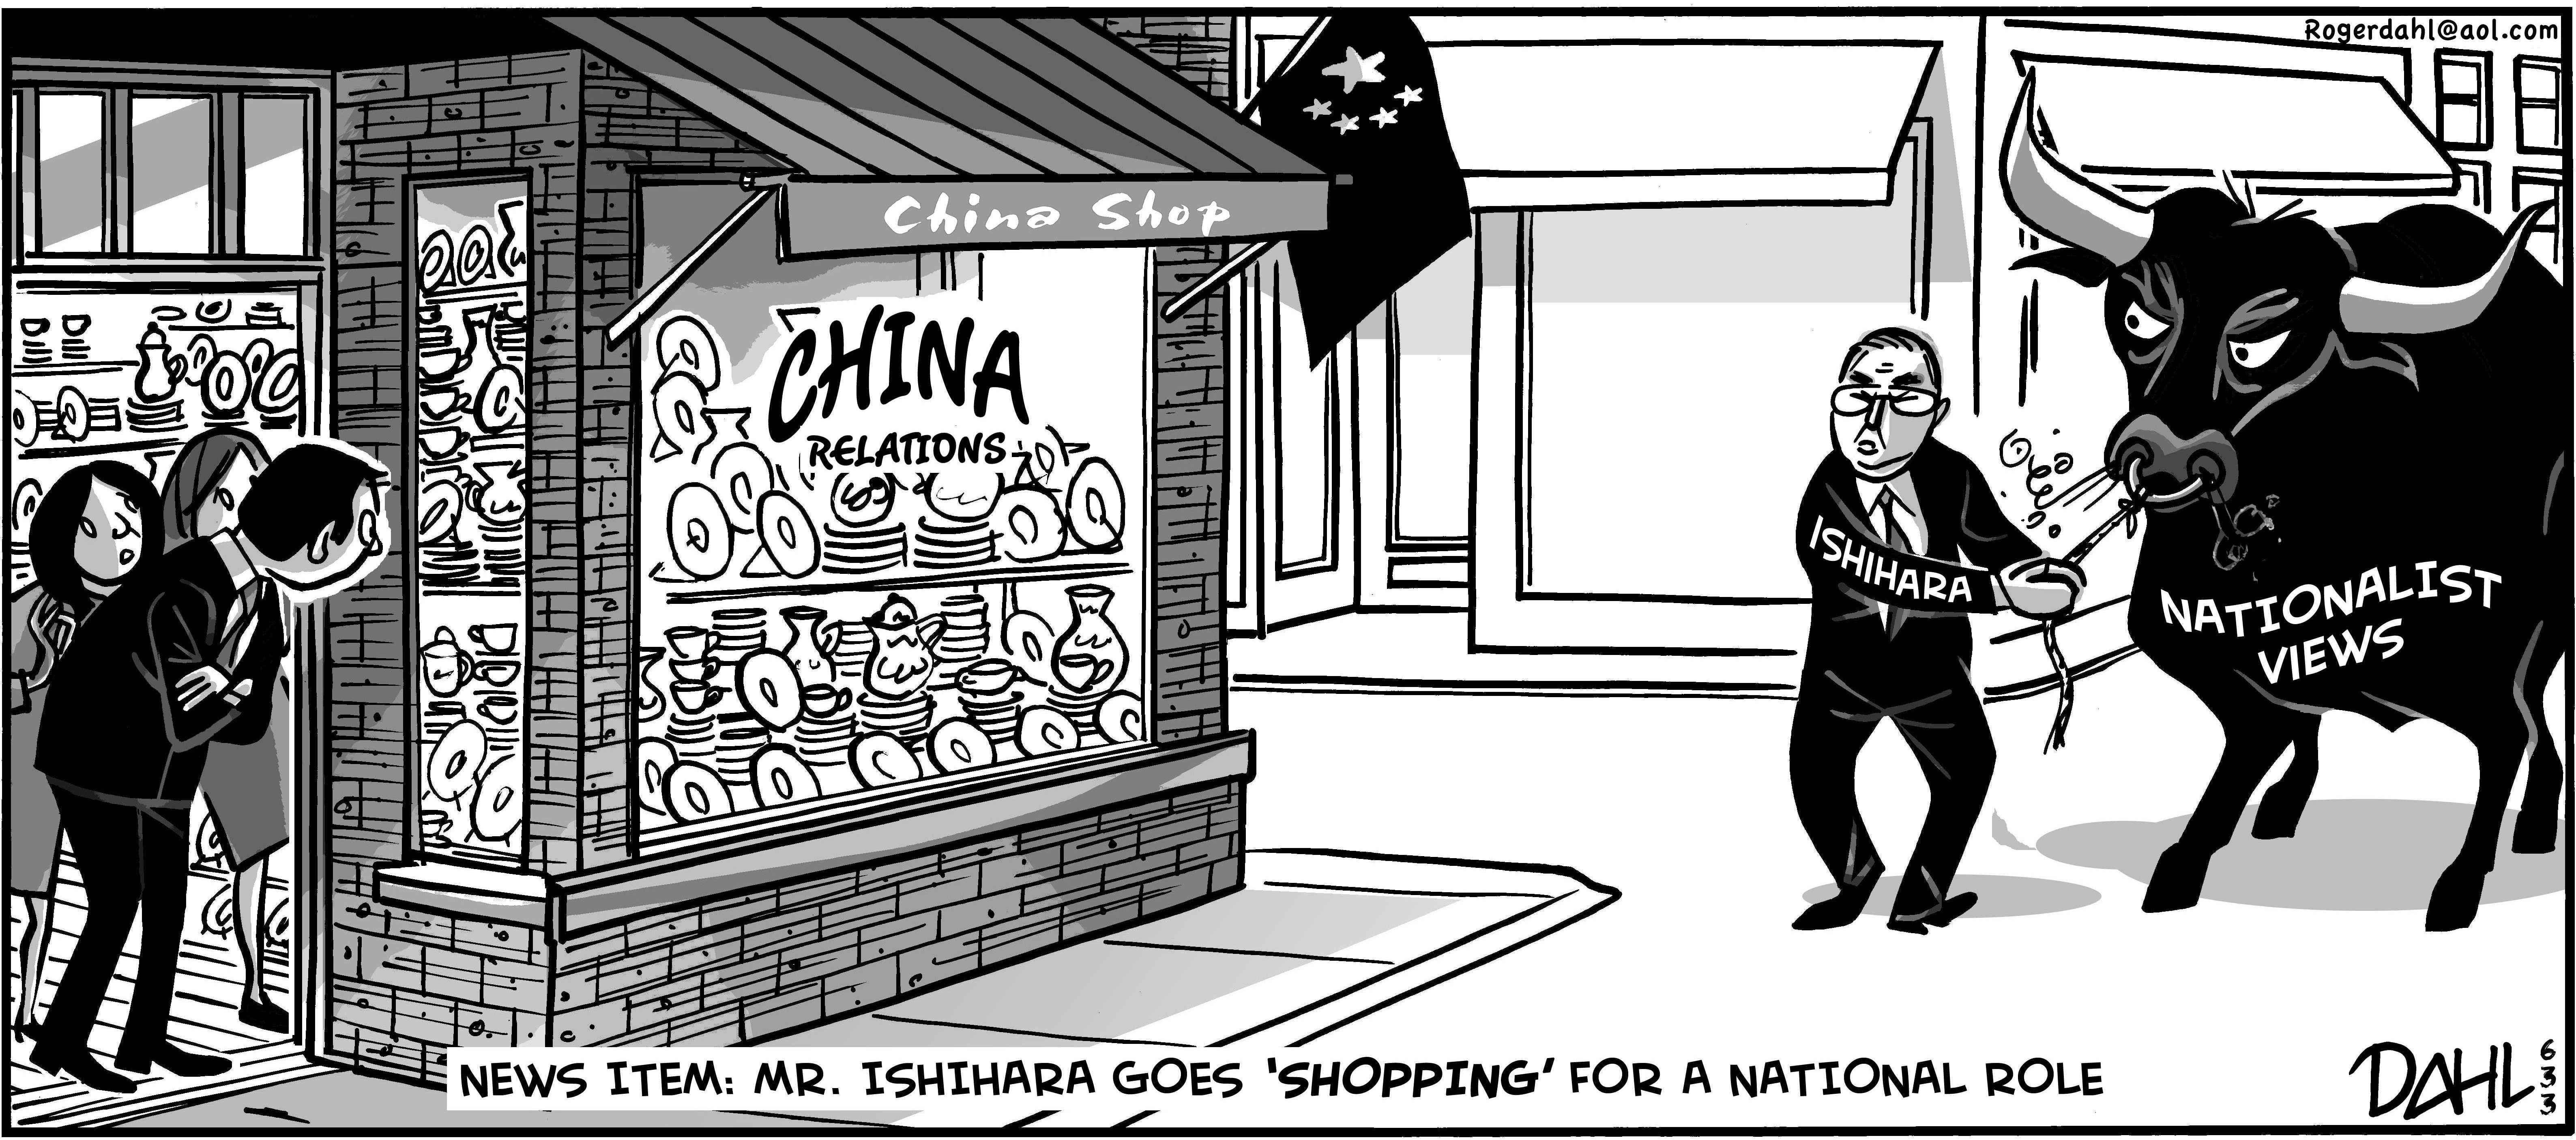 Bull China Shop | The Japan Times